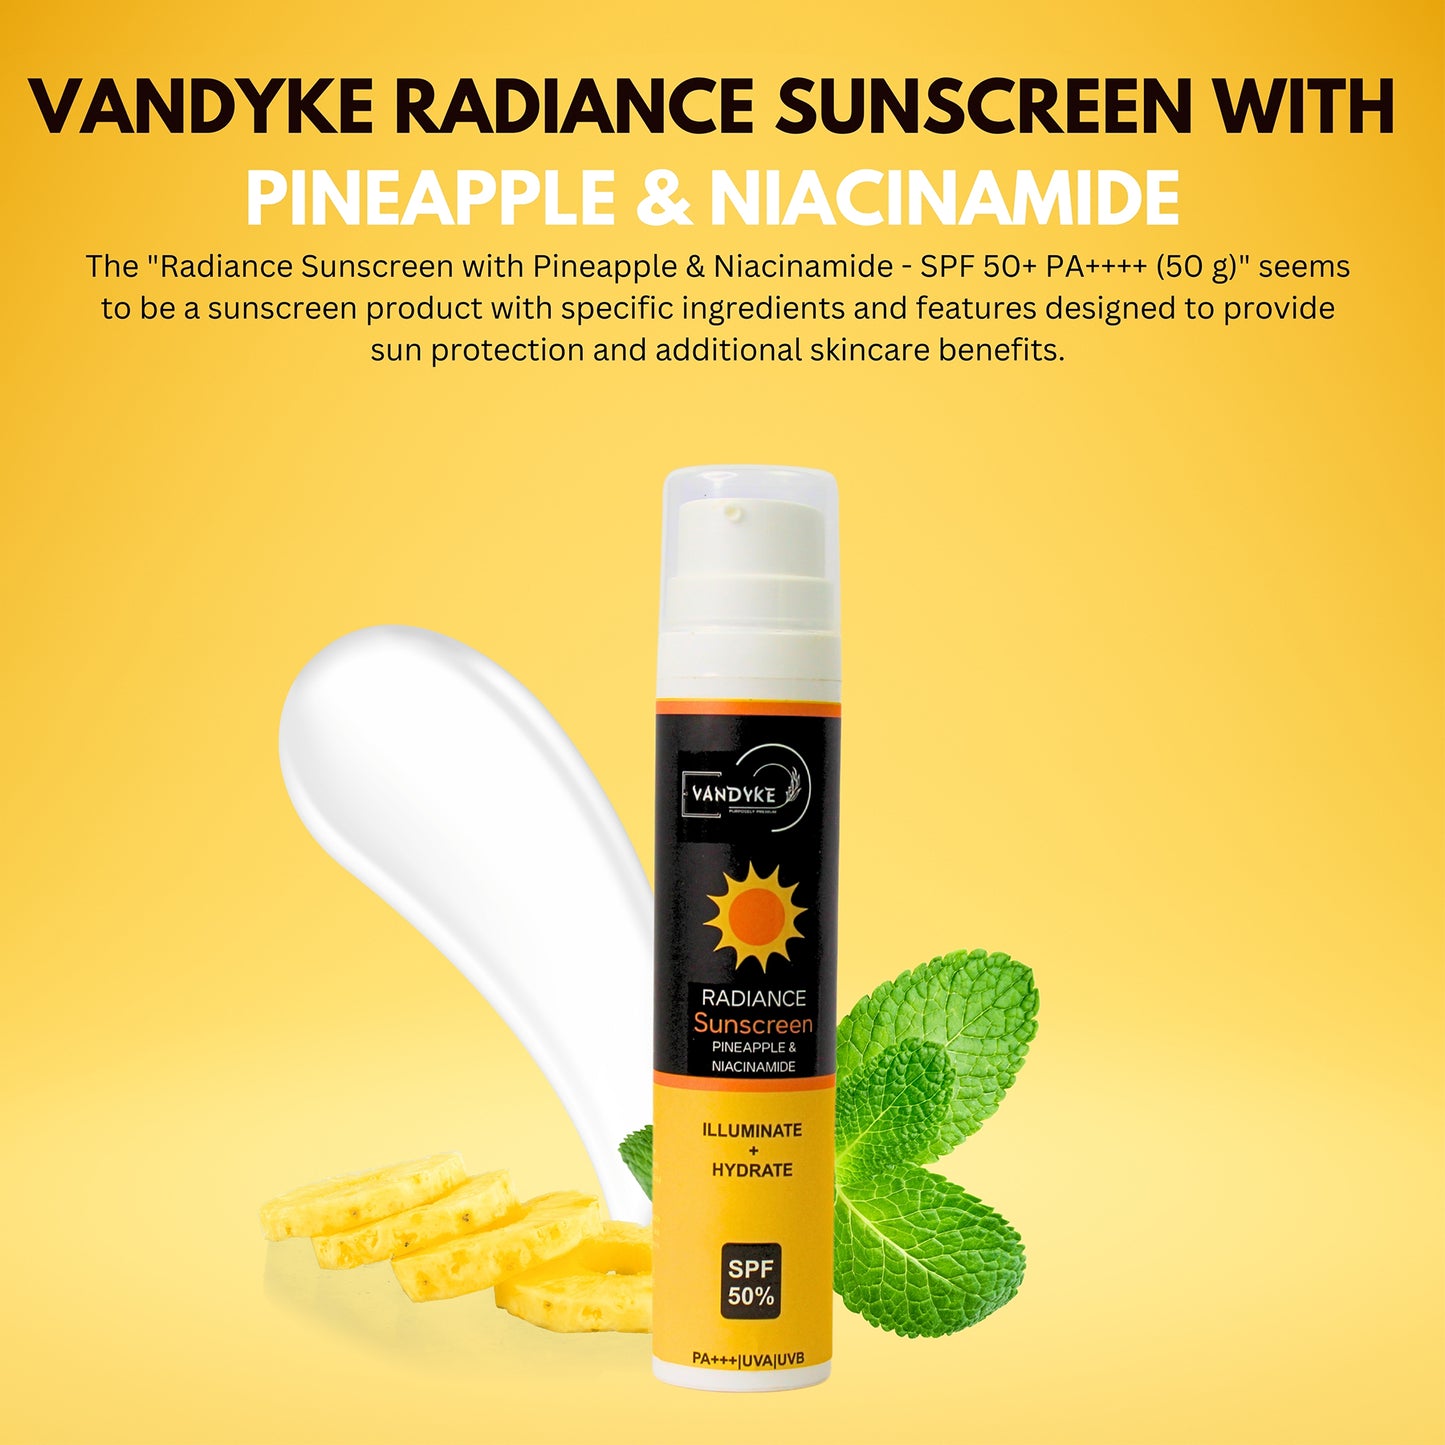 Vandyke Radiance Sunscreen with Pineapple & Niacinamide SPF 50+ PA+++, 50gm